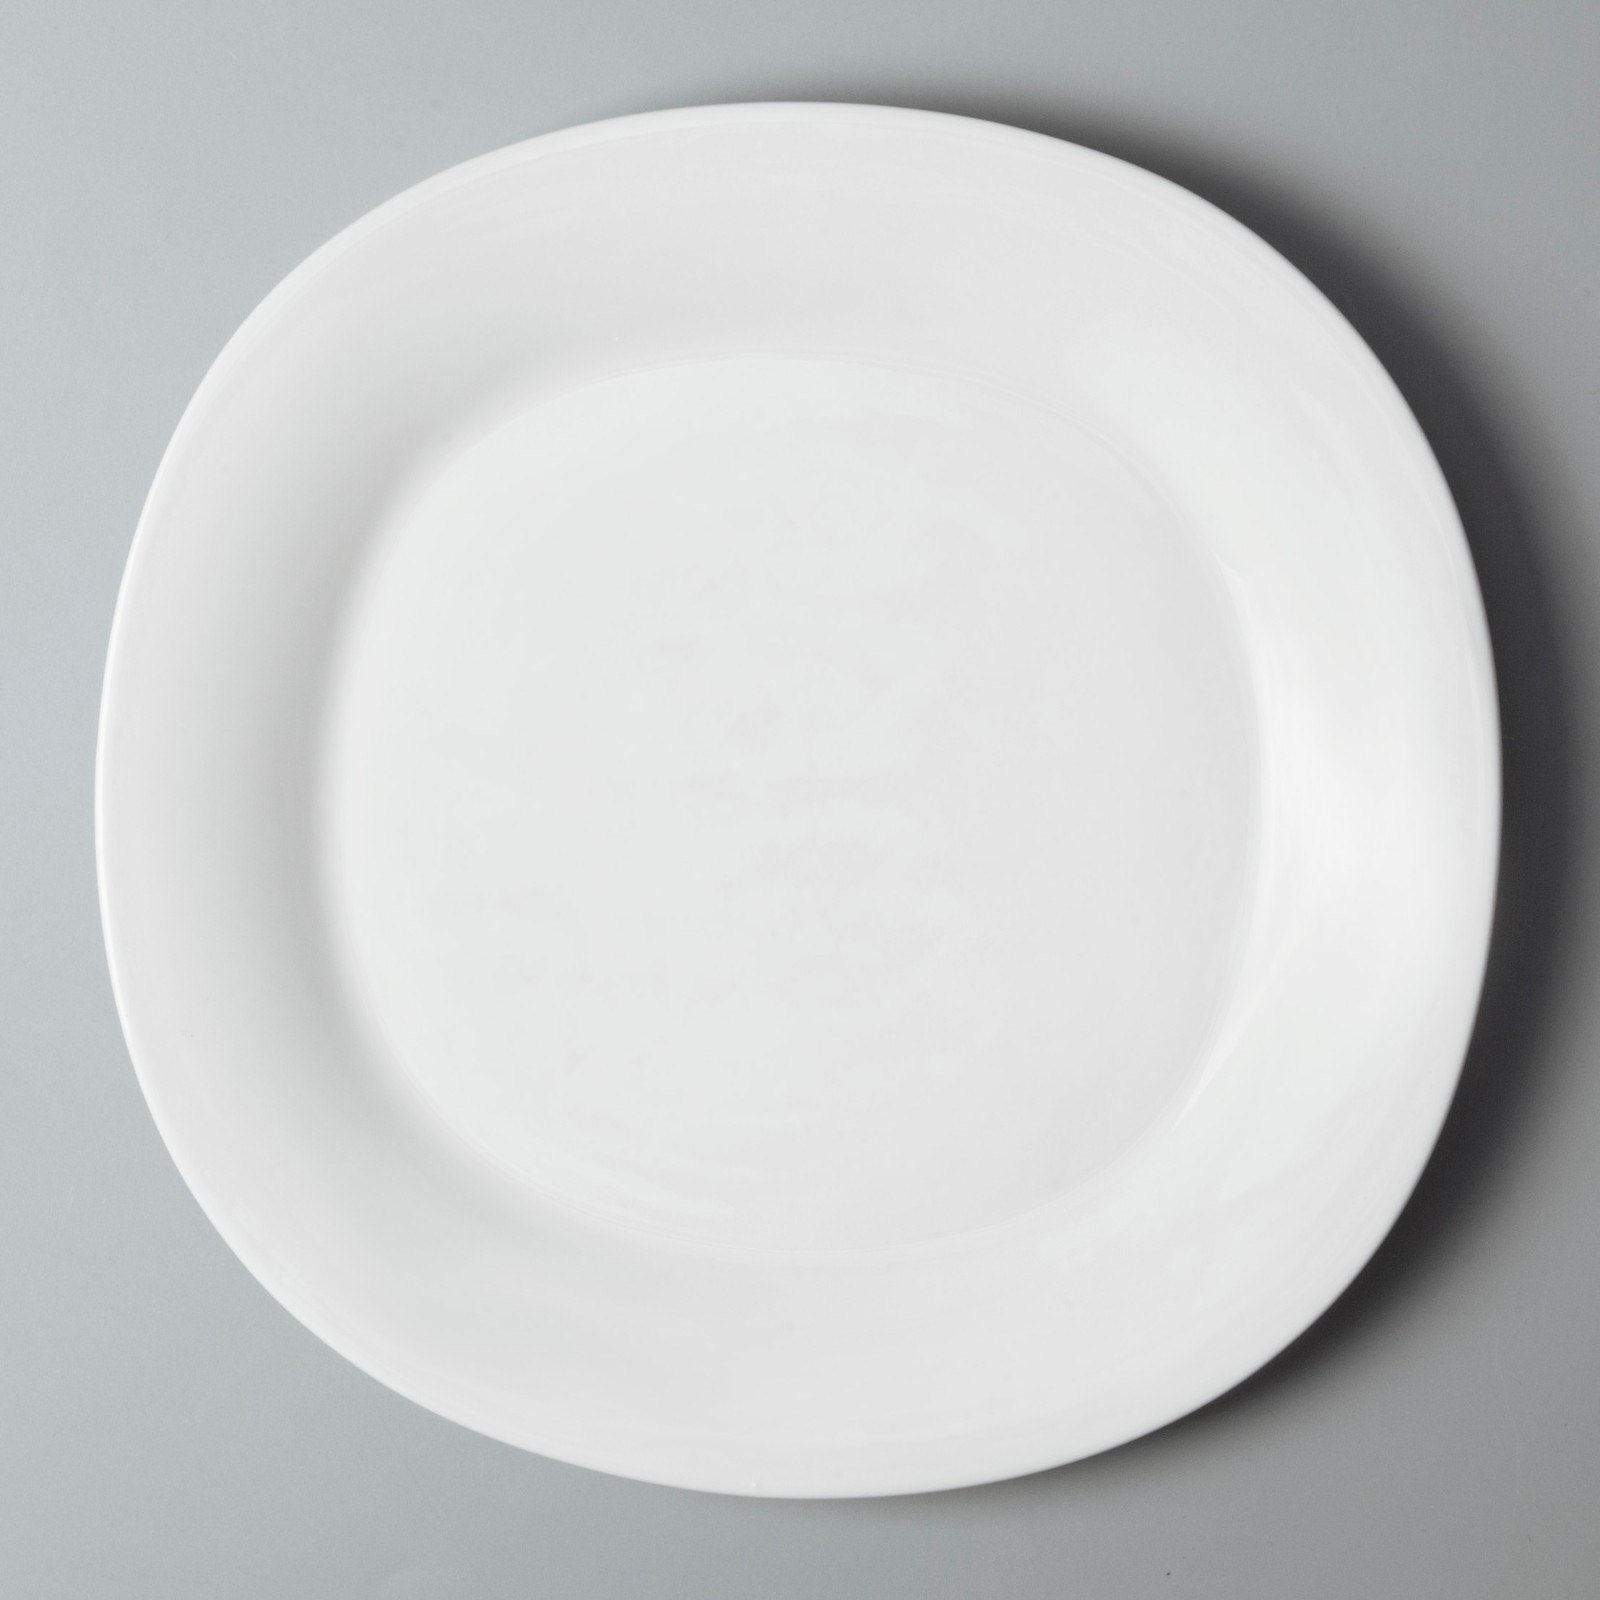 square white plate set Italian style manufacturerfor dinner